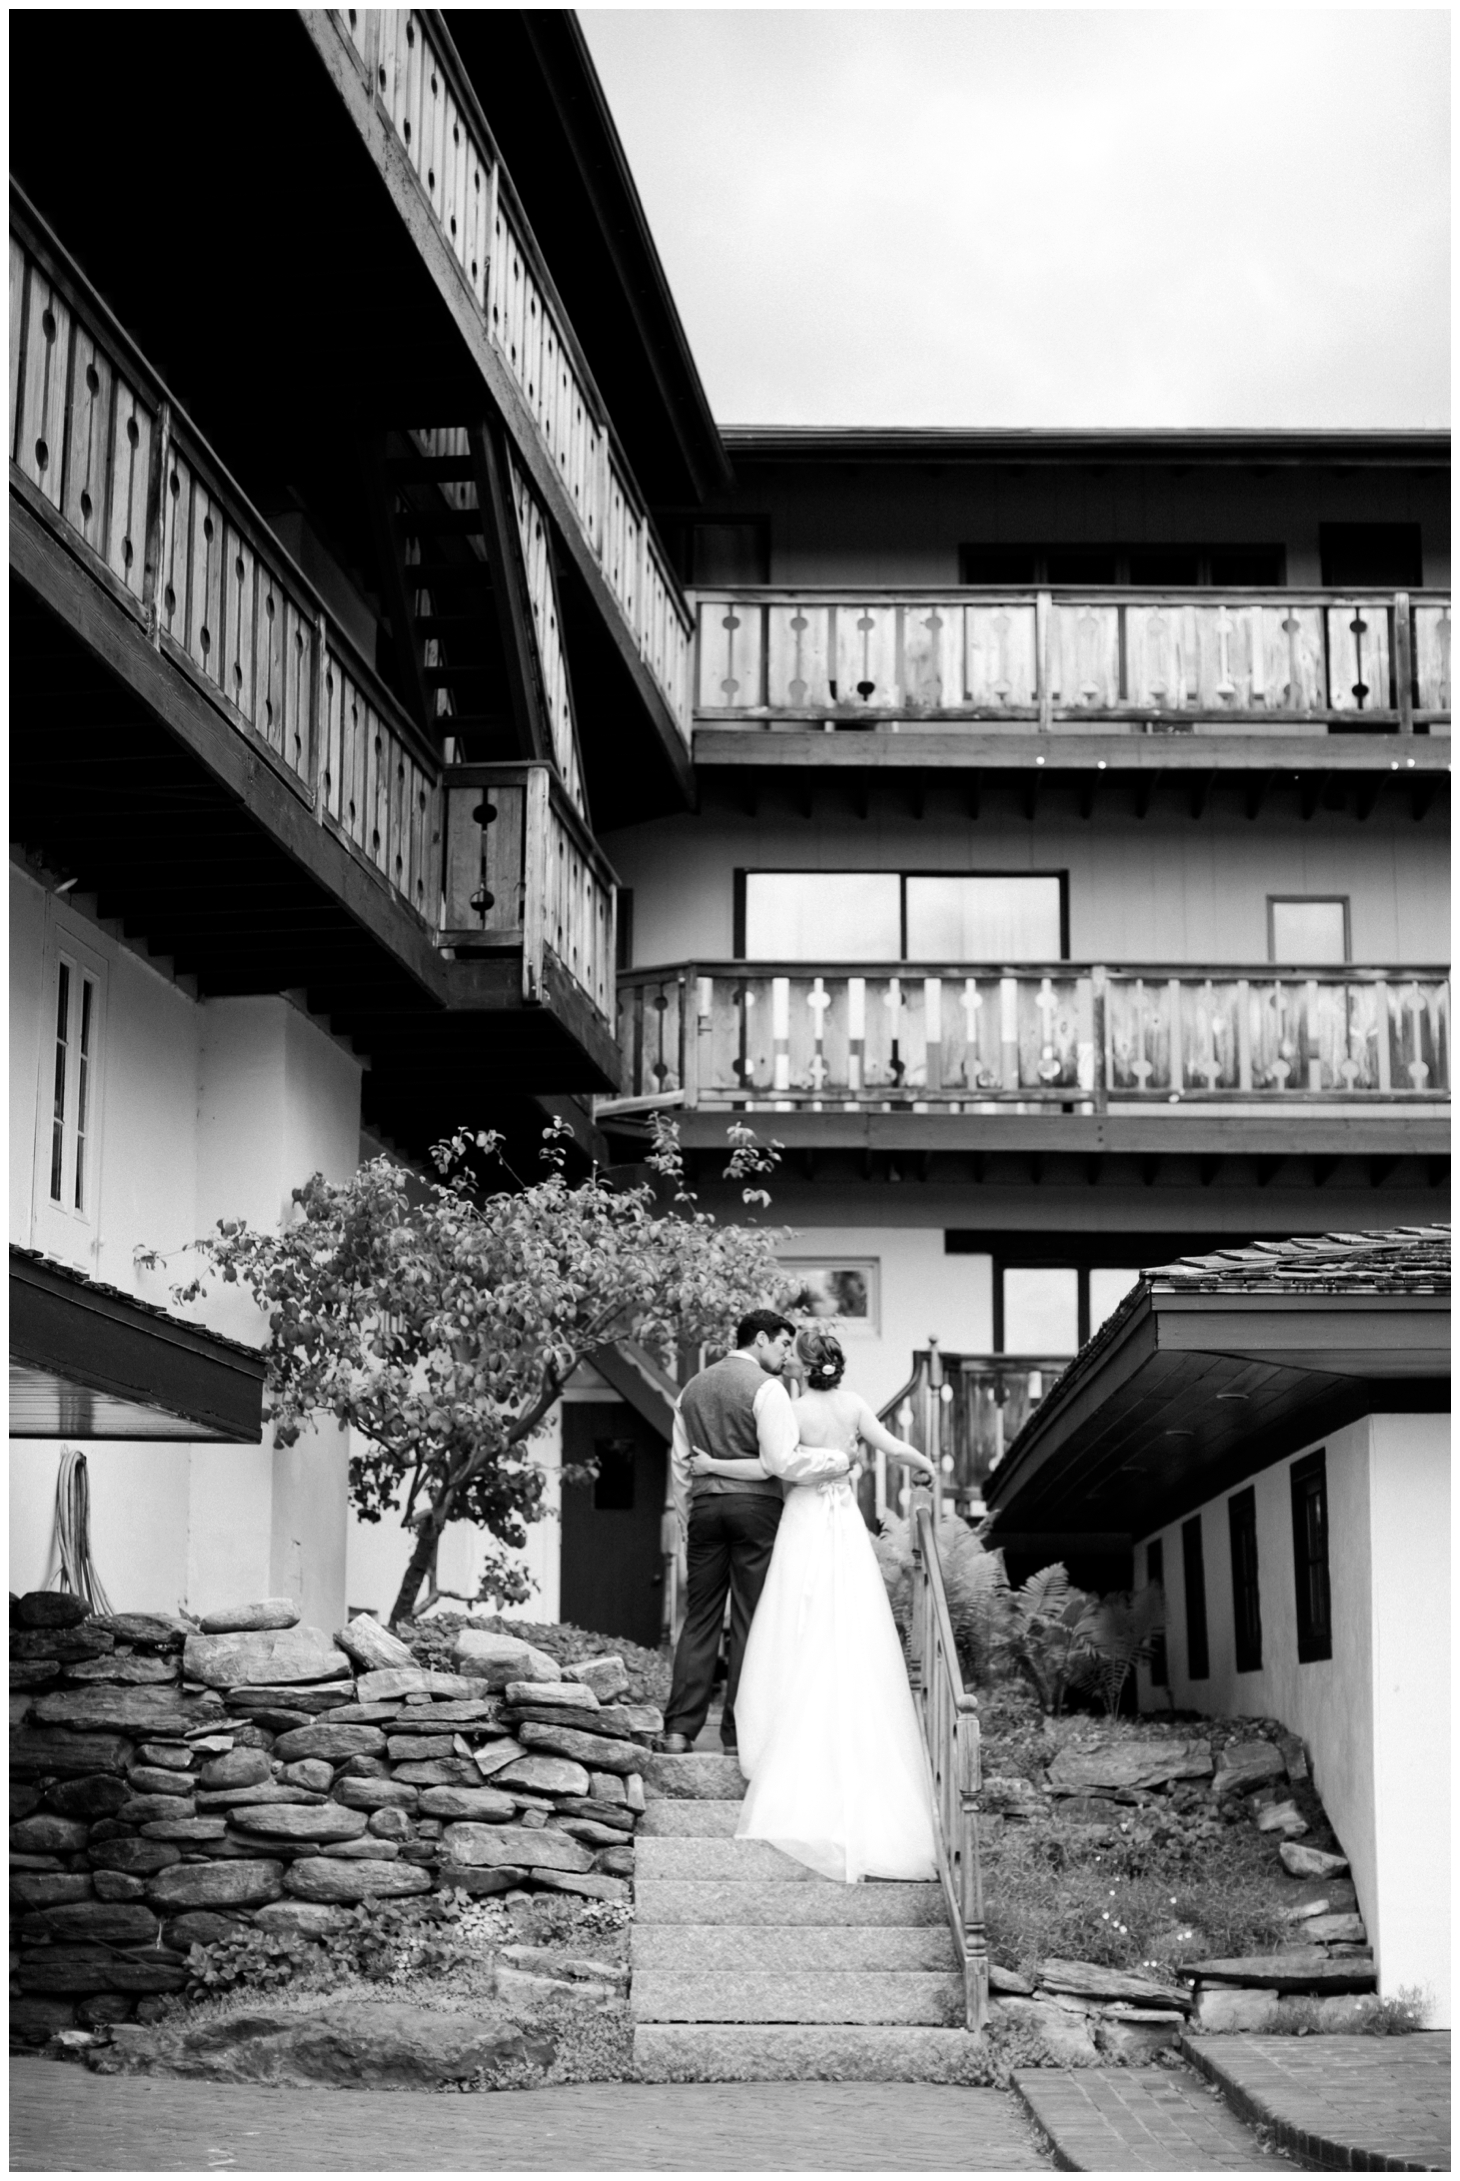 Kris & Christine's Mountain-Inspired Vermont Lodge Wedding - by Sarah Bradshaw Photography_0024